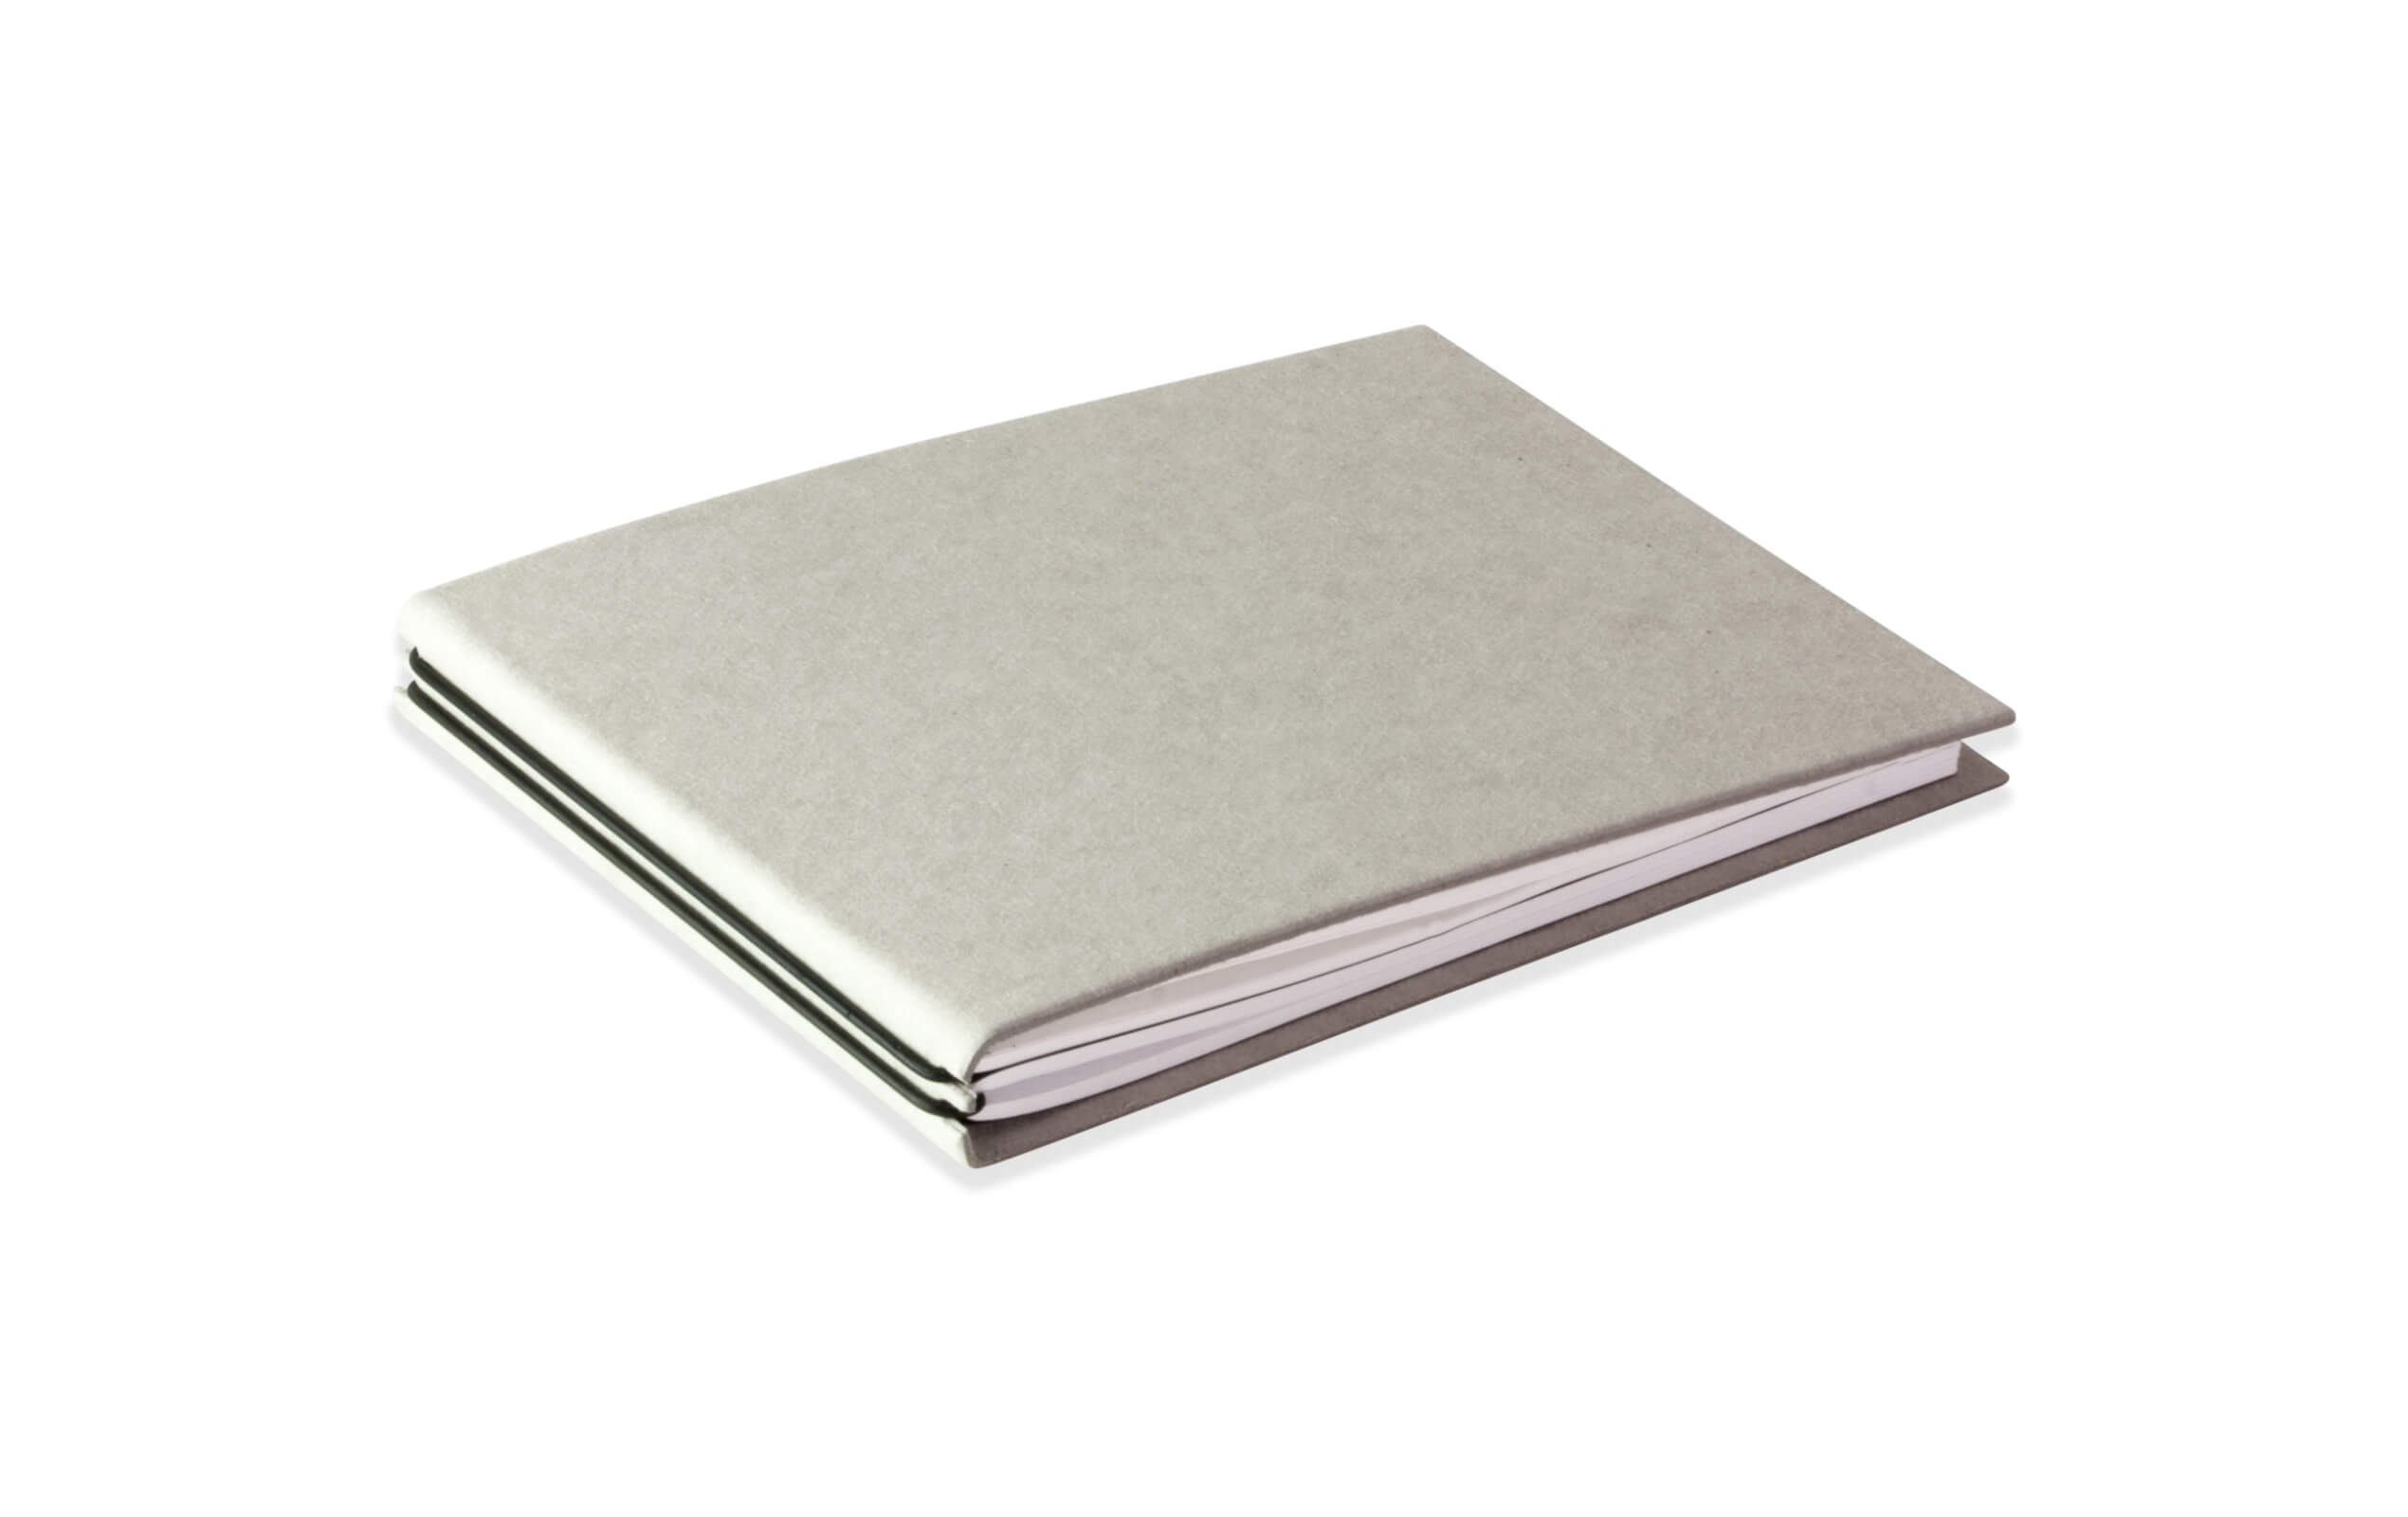 FlowBook A6 paysage - Vegan stone (gris clair)